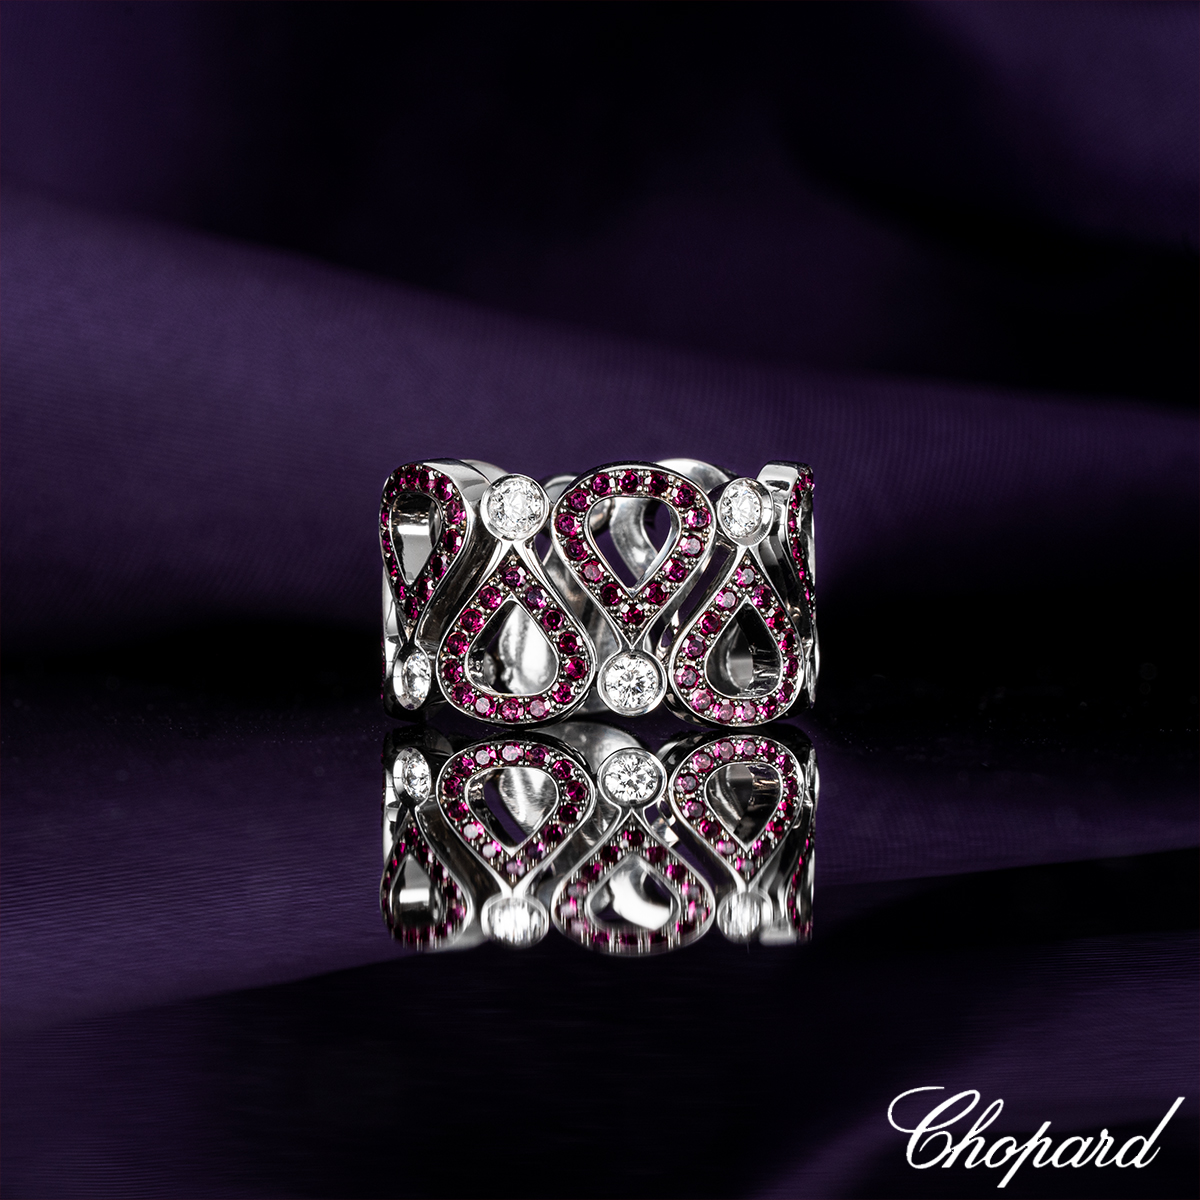 Chopard White Gold Ruby & Diamond Pushkin Ring 82/3935-0